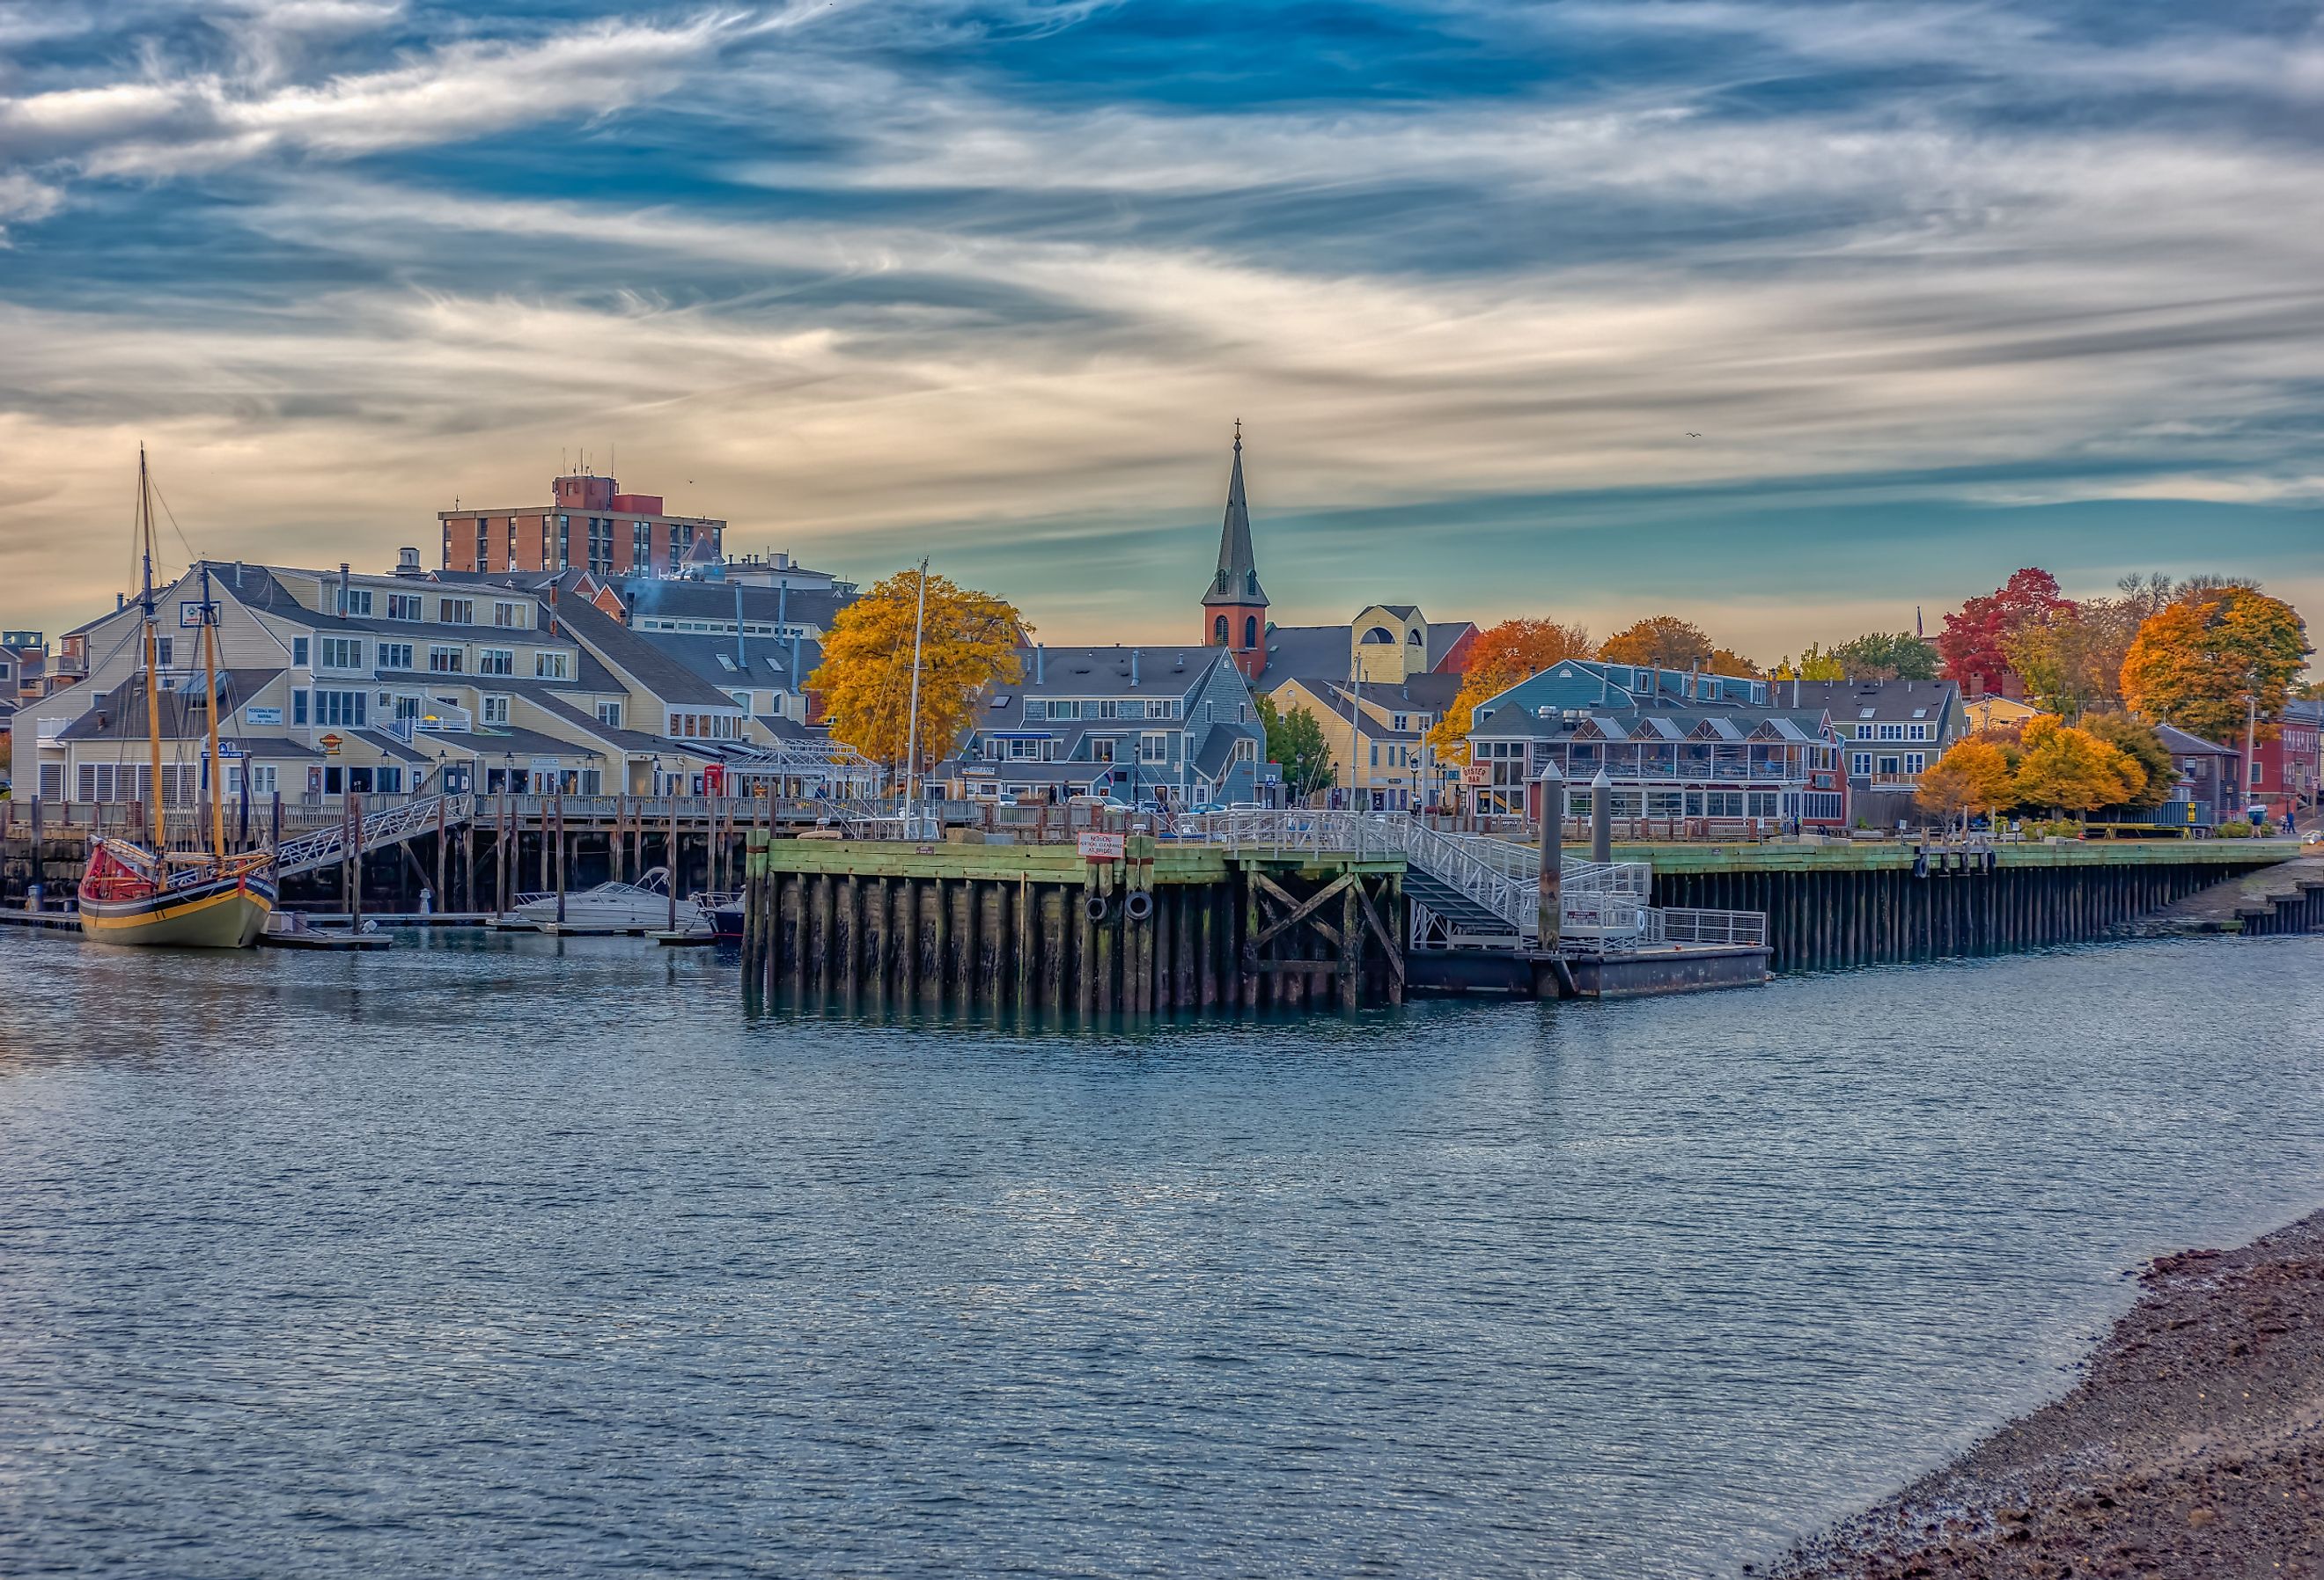 Pickering Wharf Marina Cityscape, water, boats, trees, fall colors, Salem, Massachusetts. Image credit Terry Kelly via Shutterstock